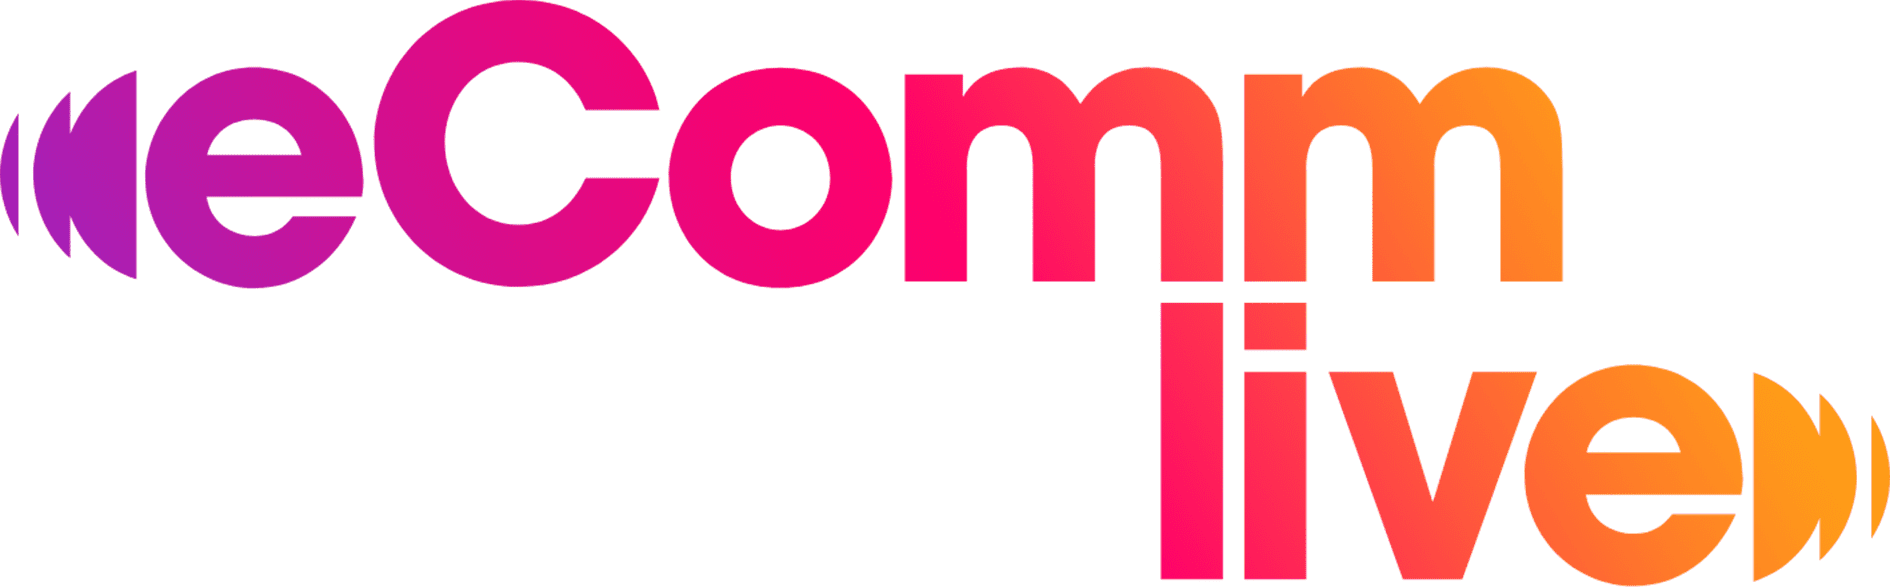 eComm Live logo